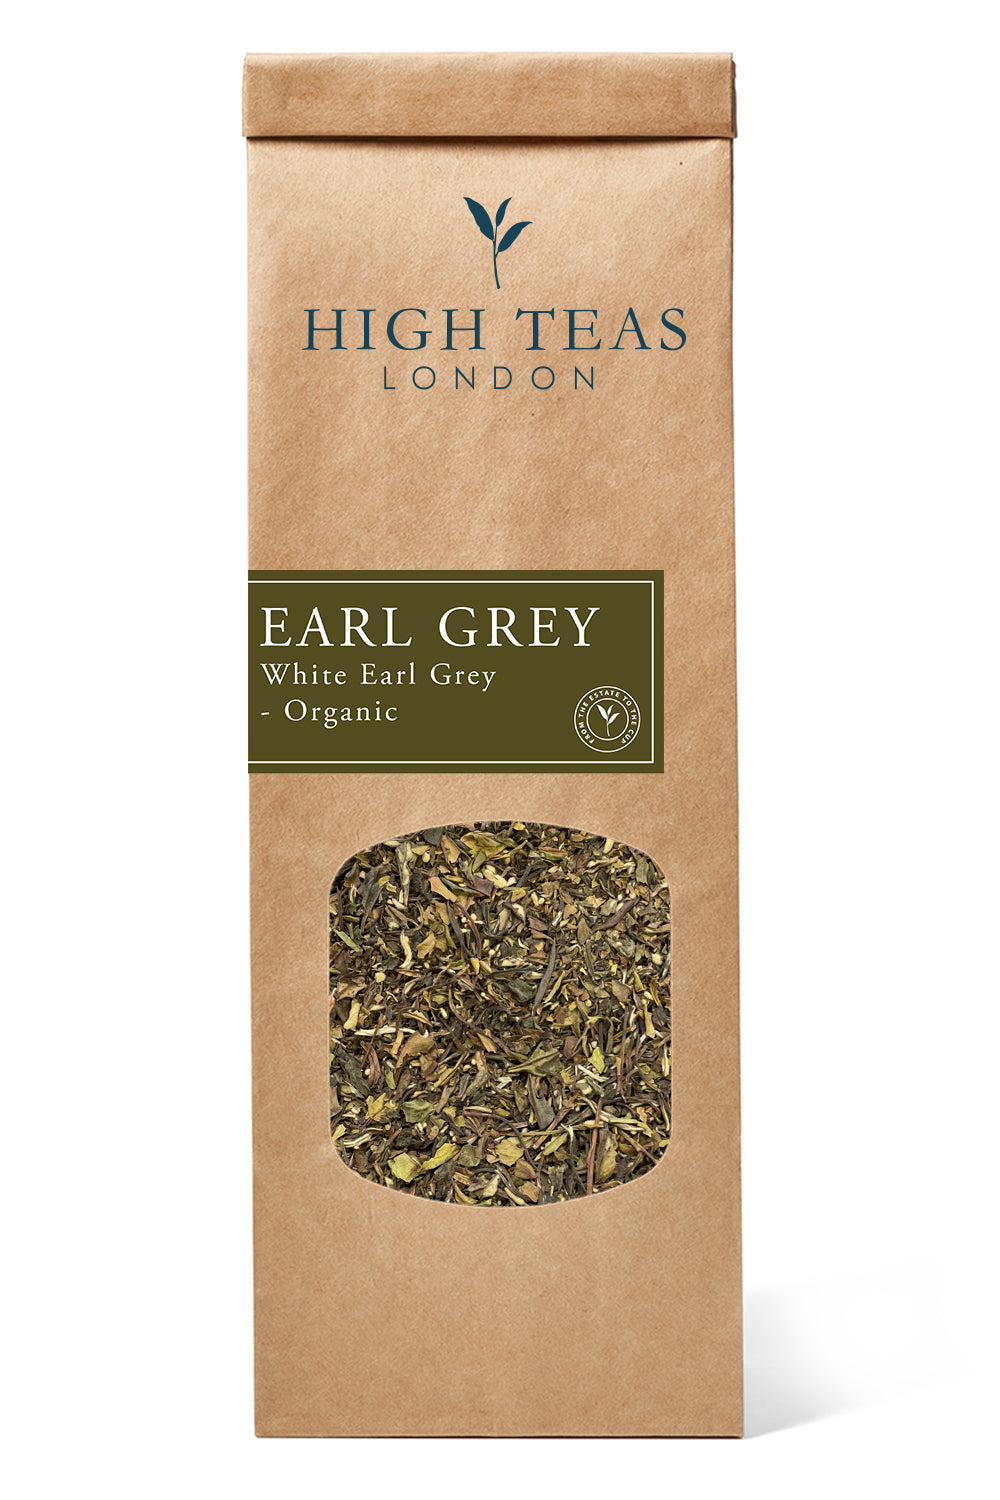 White Earl Grey - Organic-50g-Loose Leaf Tea-High Teas